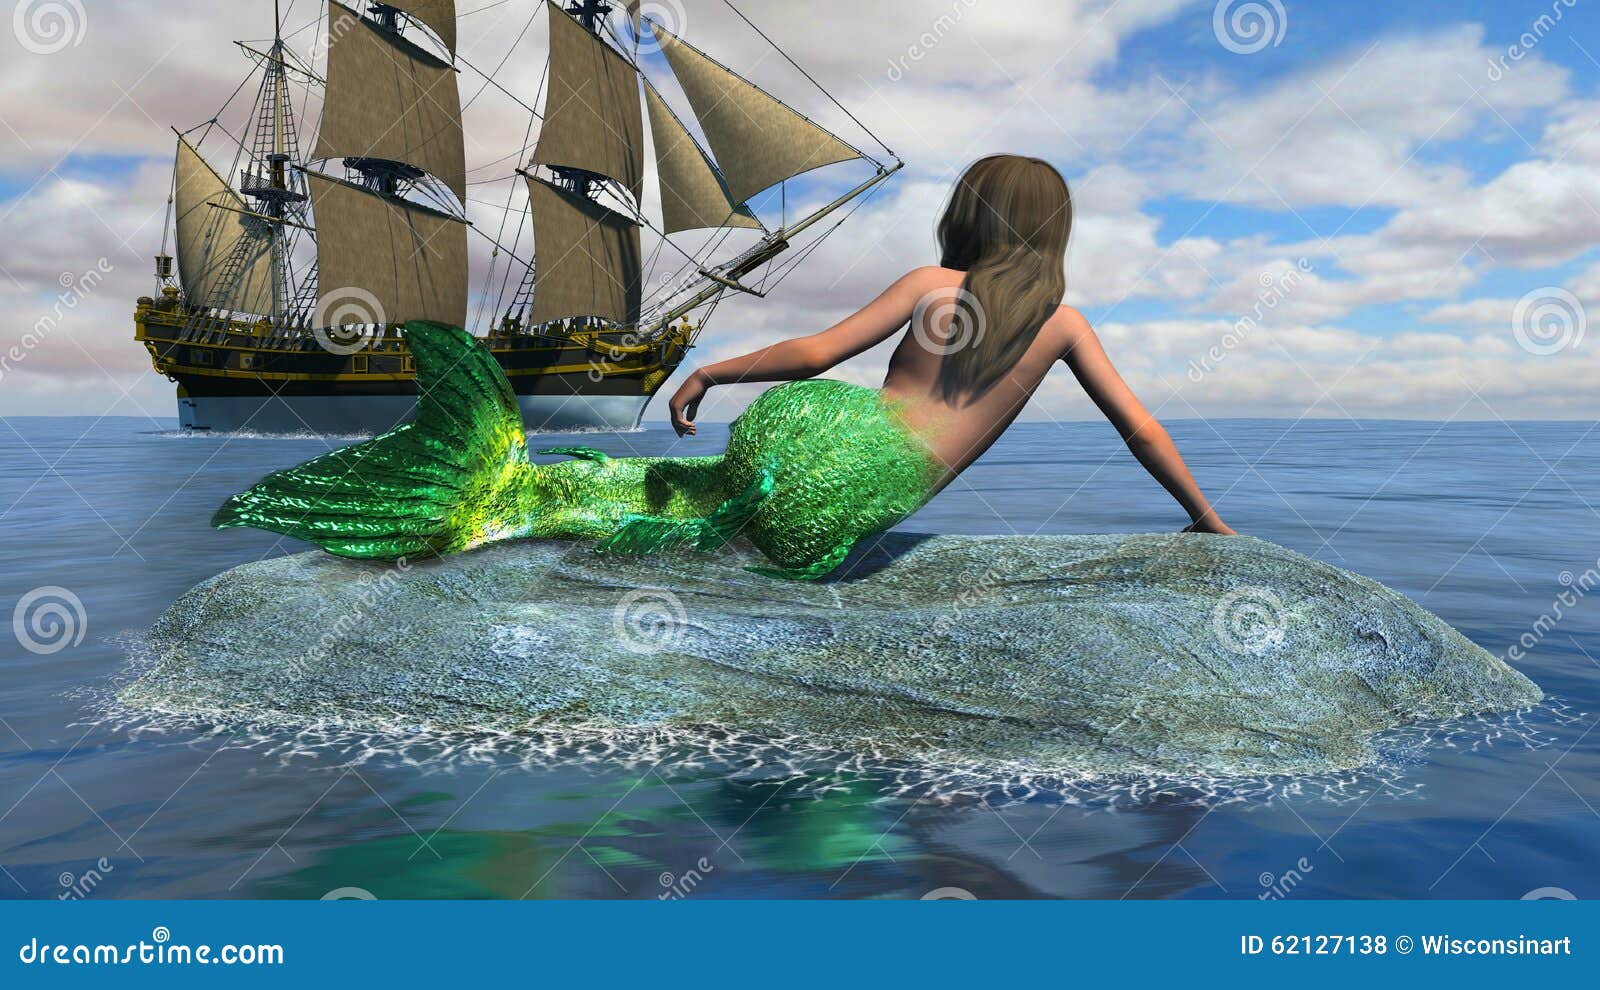 tall sailing ship, sea mermaid 